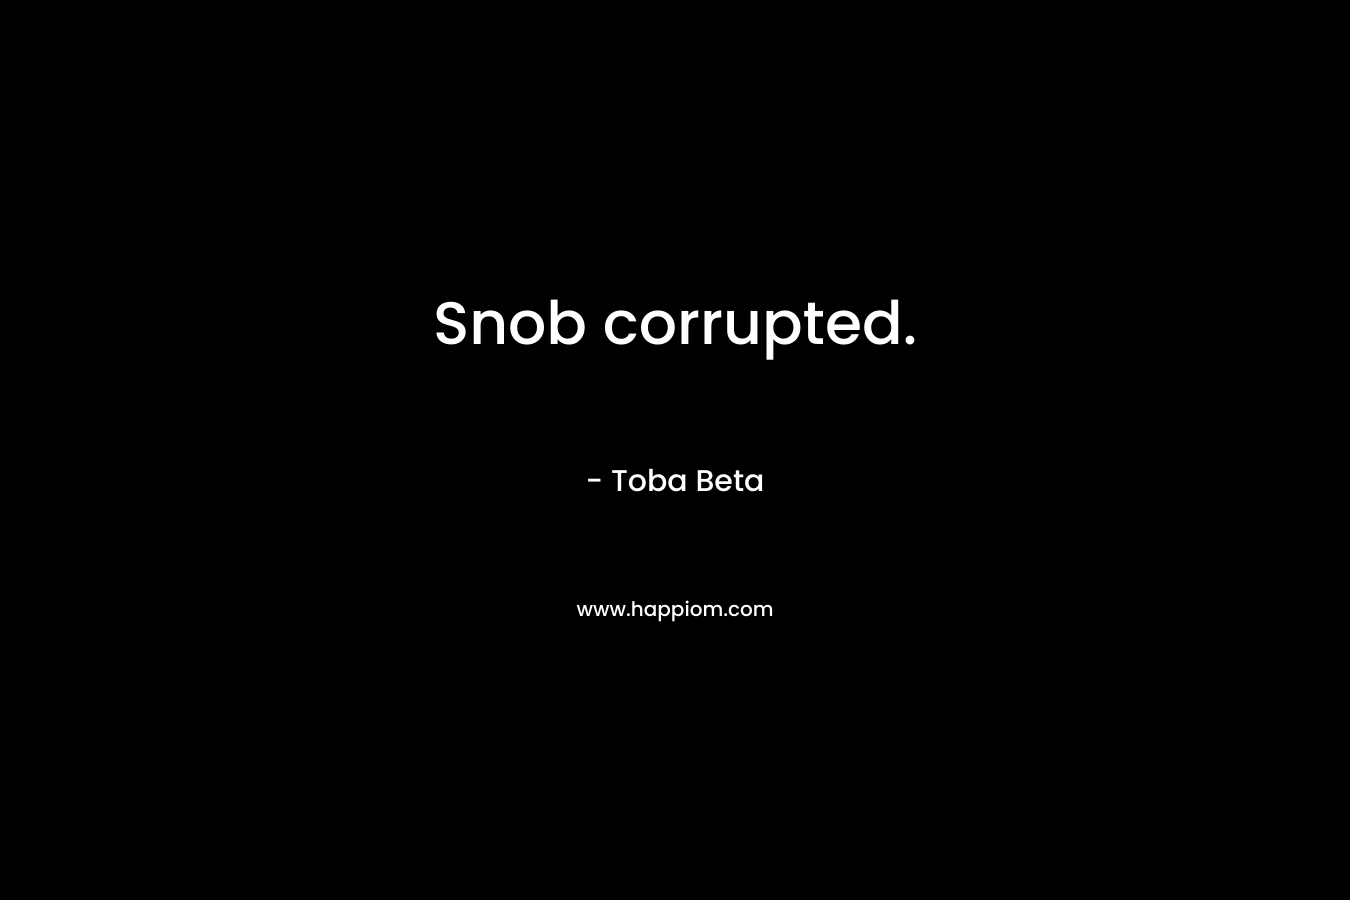 Snob corrupted.